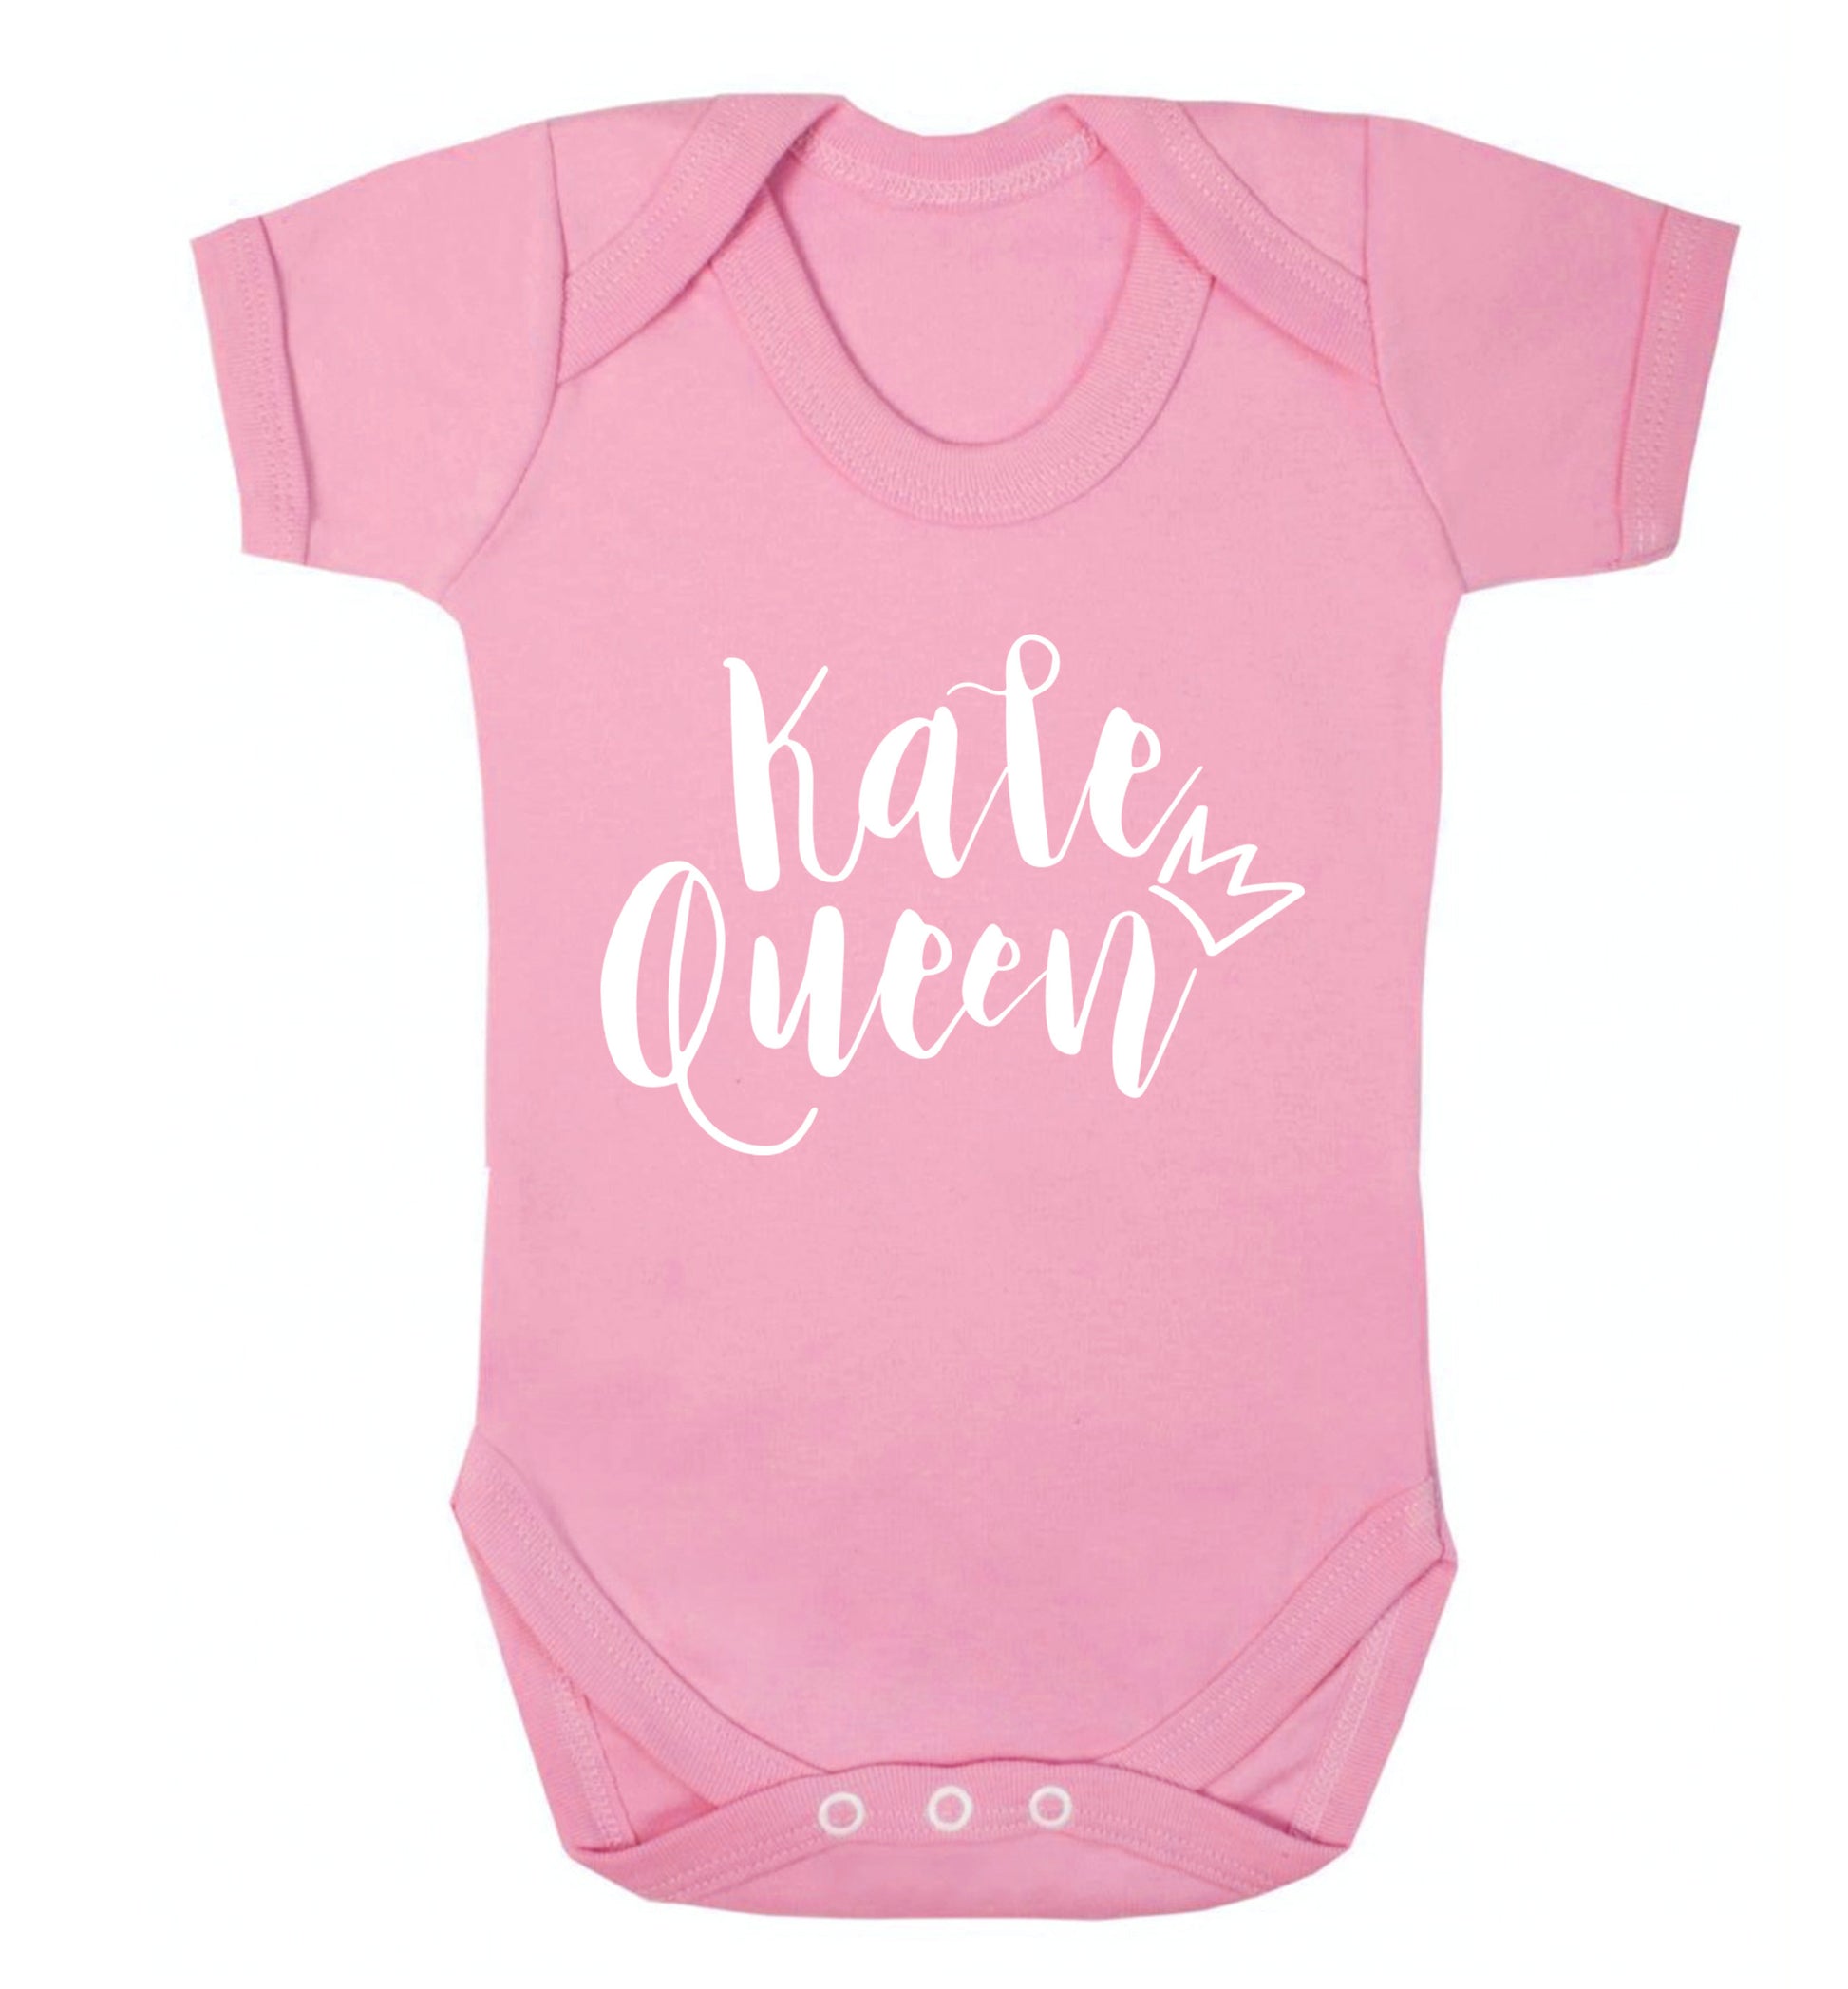 Kale Queen Baby Vest pale pink 18-24 months